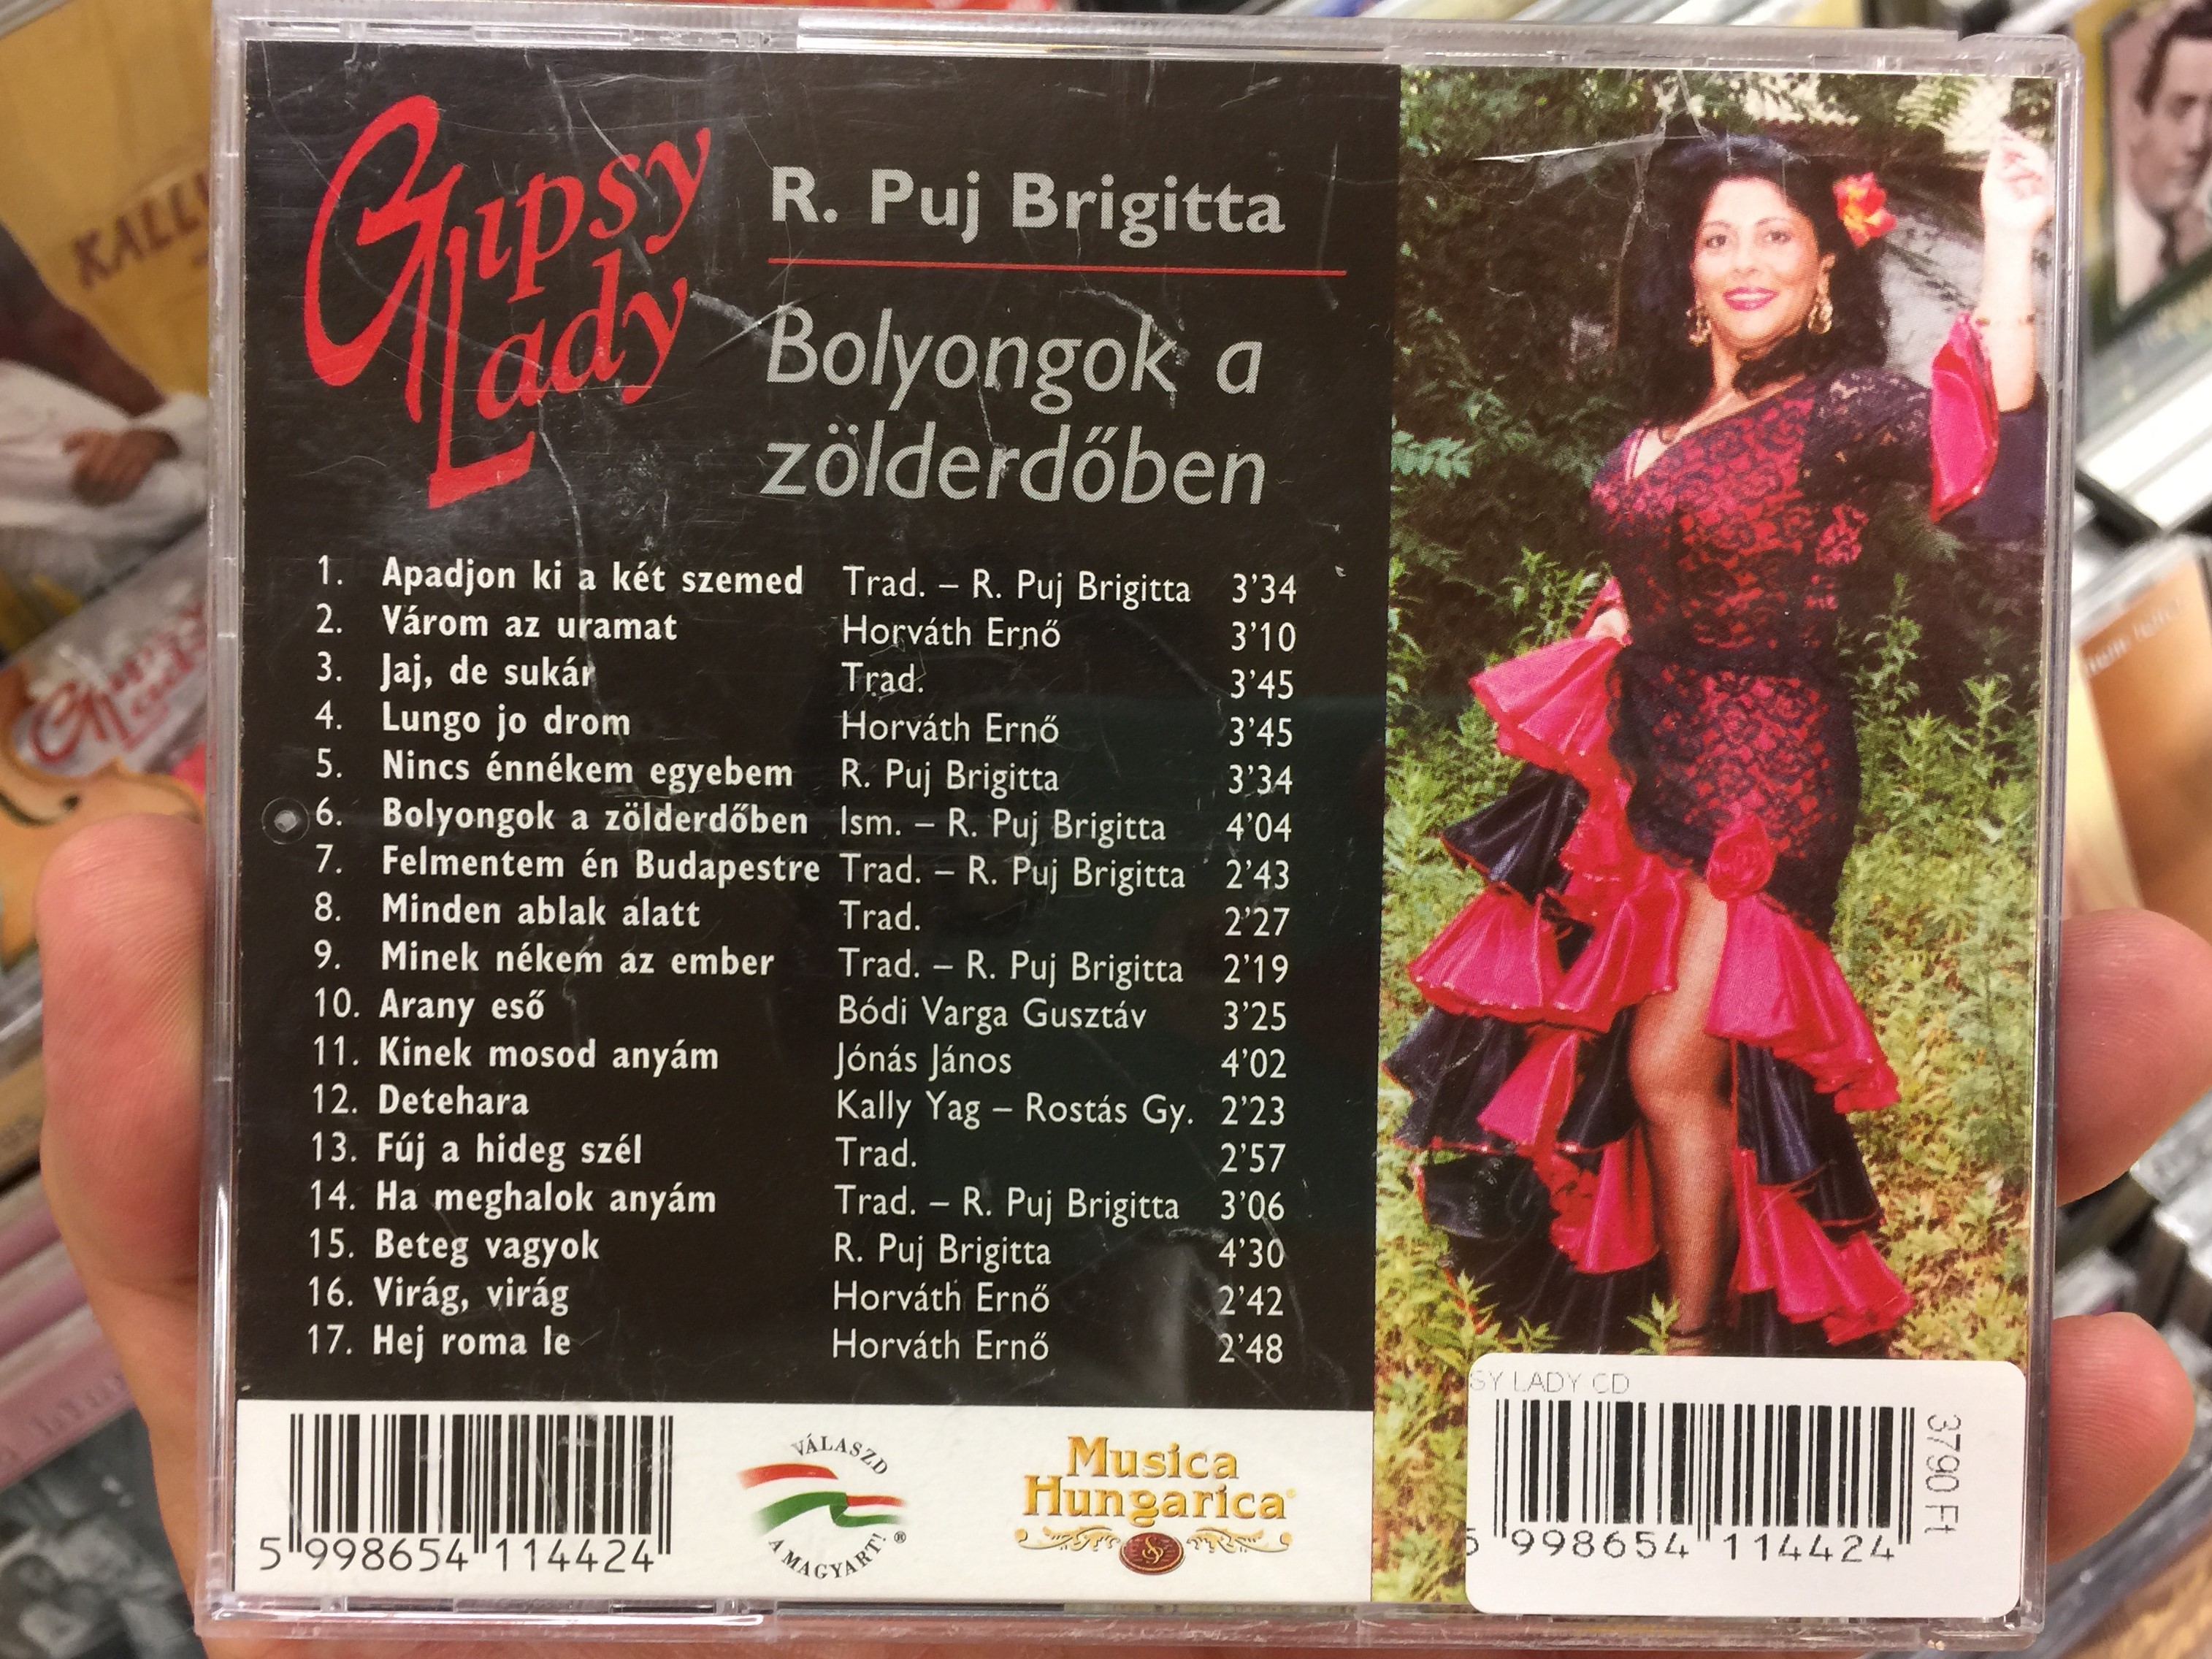 r.-puj-brigitta-gipsy-lady-bolyongok-a-zolderdoben-100-gipsy-violins-authentic-gispy-folk-music-musica-hungarica-audio-cd-2004-stereo-mha-442-4-.jpg